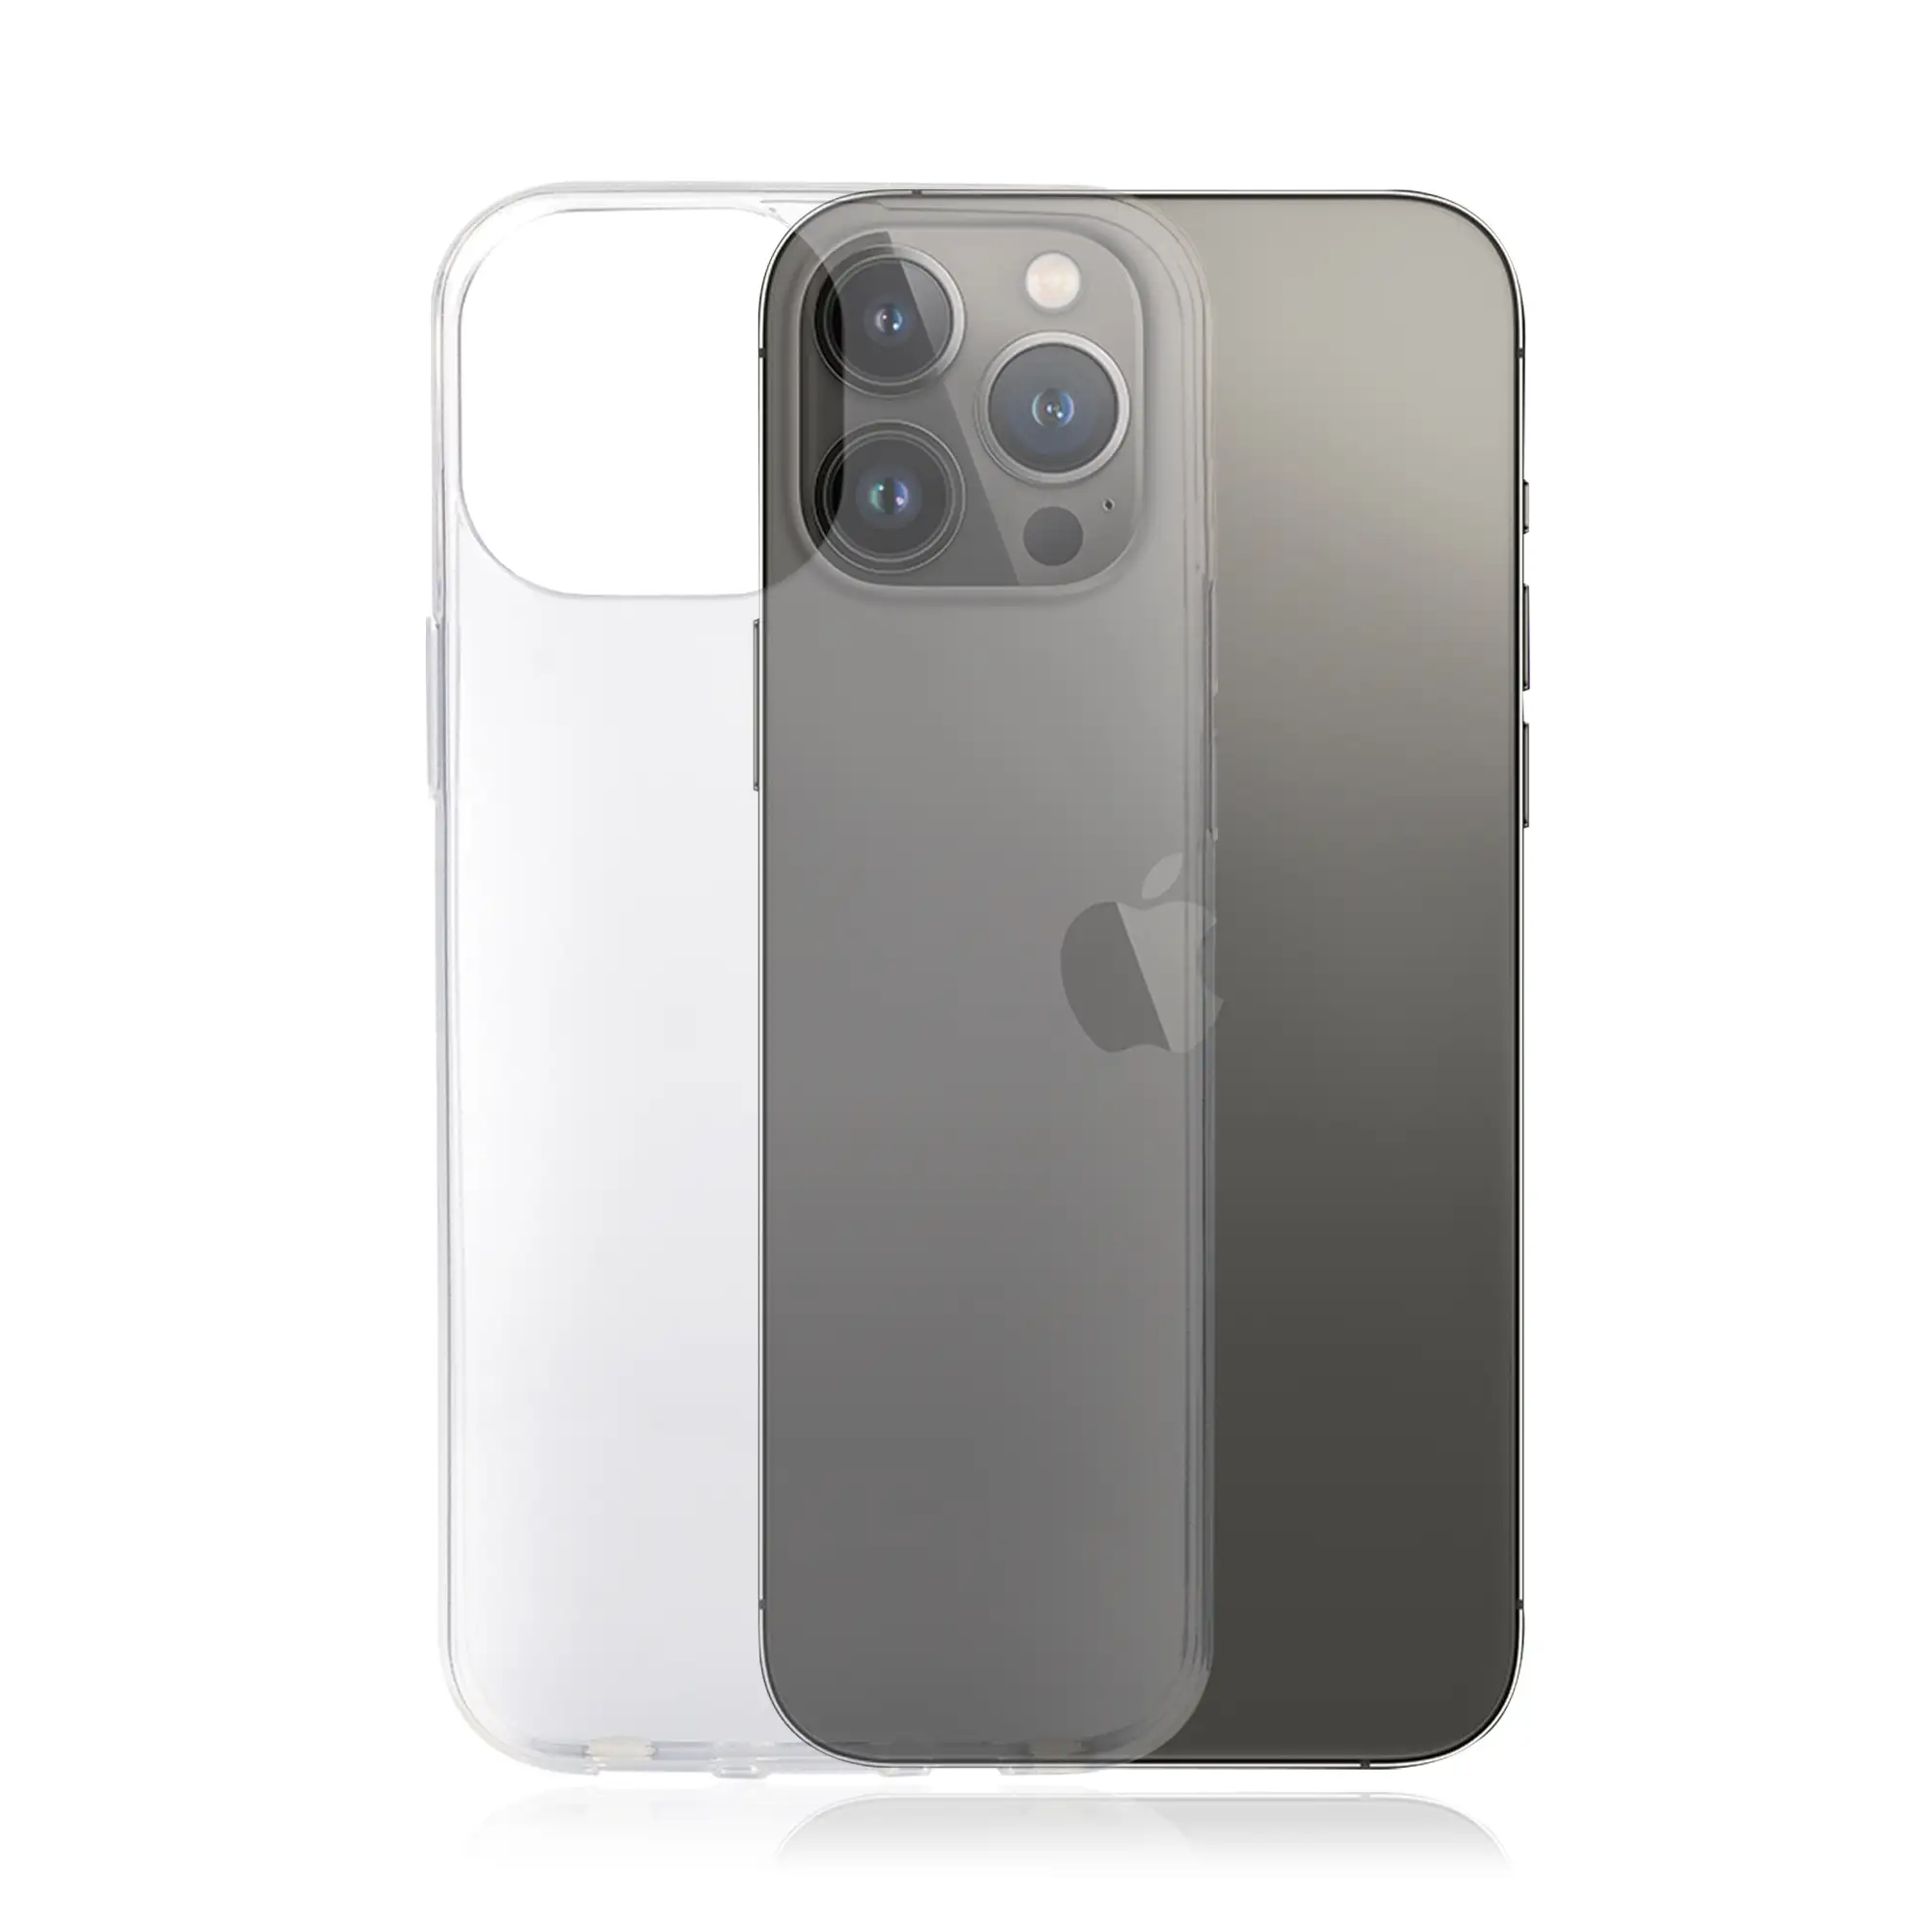 Carcasa Slim Crystal Clear de TPU transparente para iPhone 13 Pro Max.